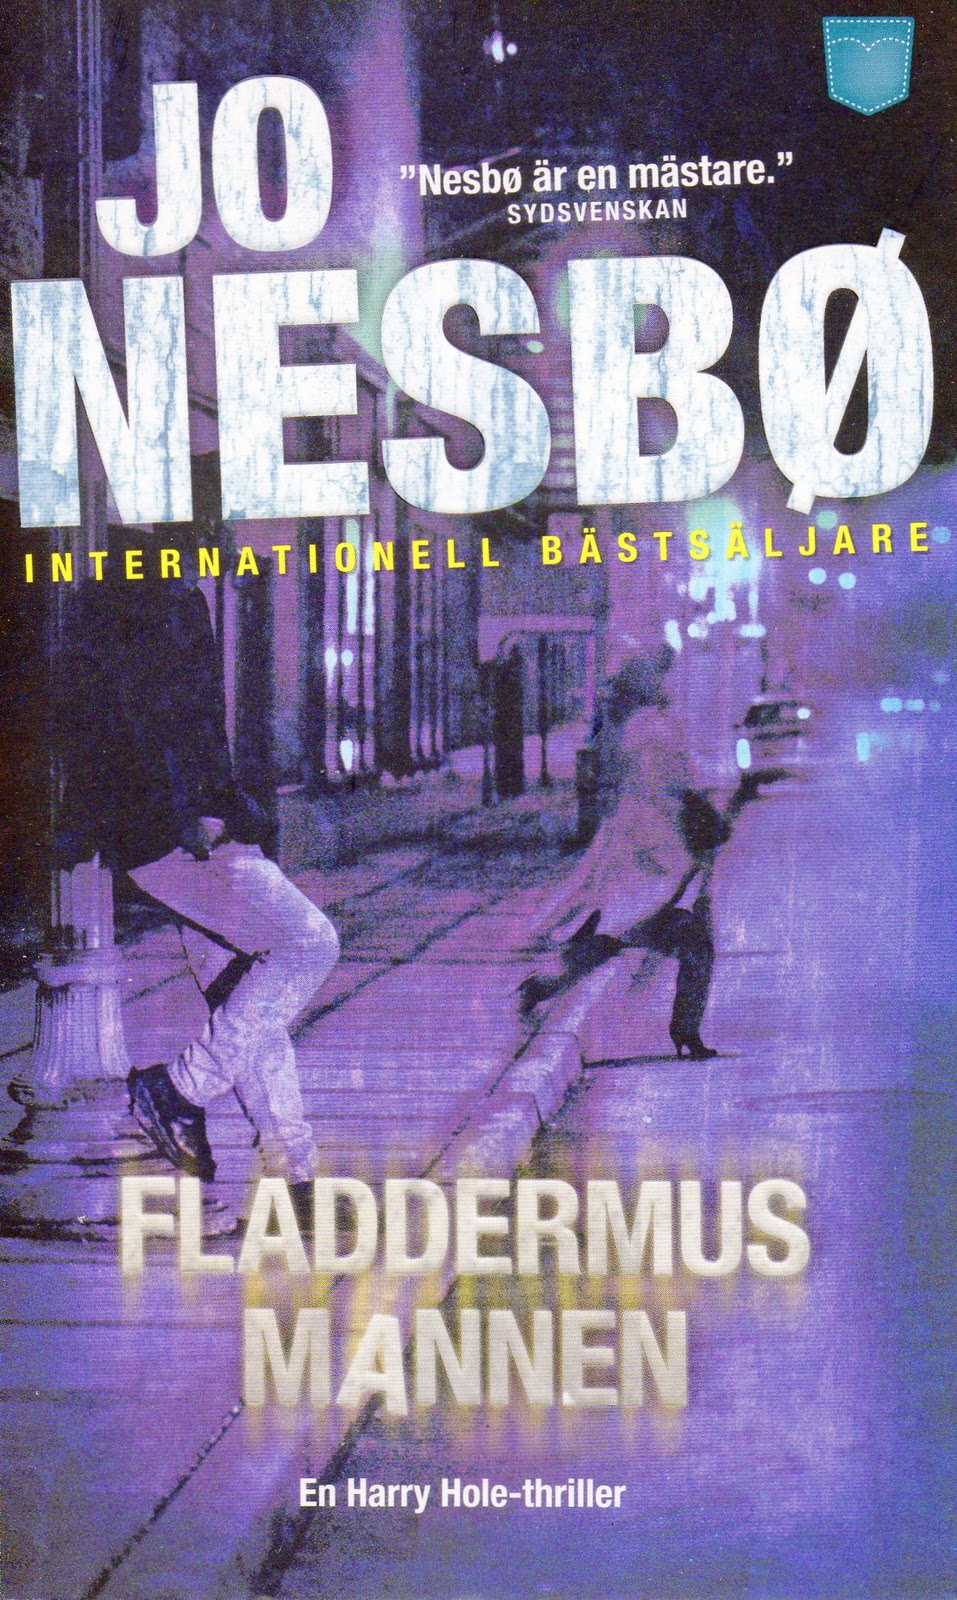 Jo Nesbø, Per Olaisen: Fladdermusmannen (EBook, Swedish language, 2007, Piratförlaget)